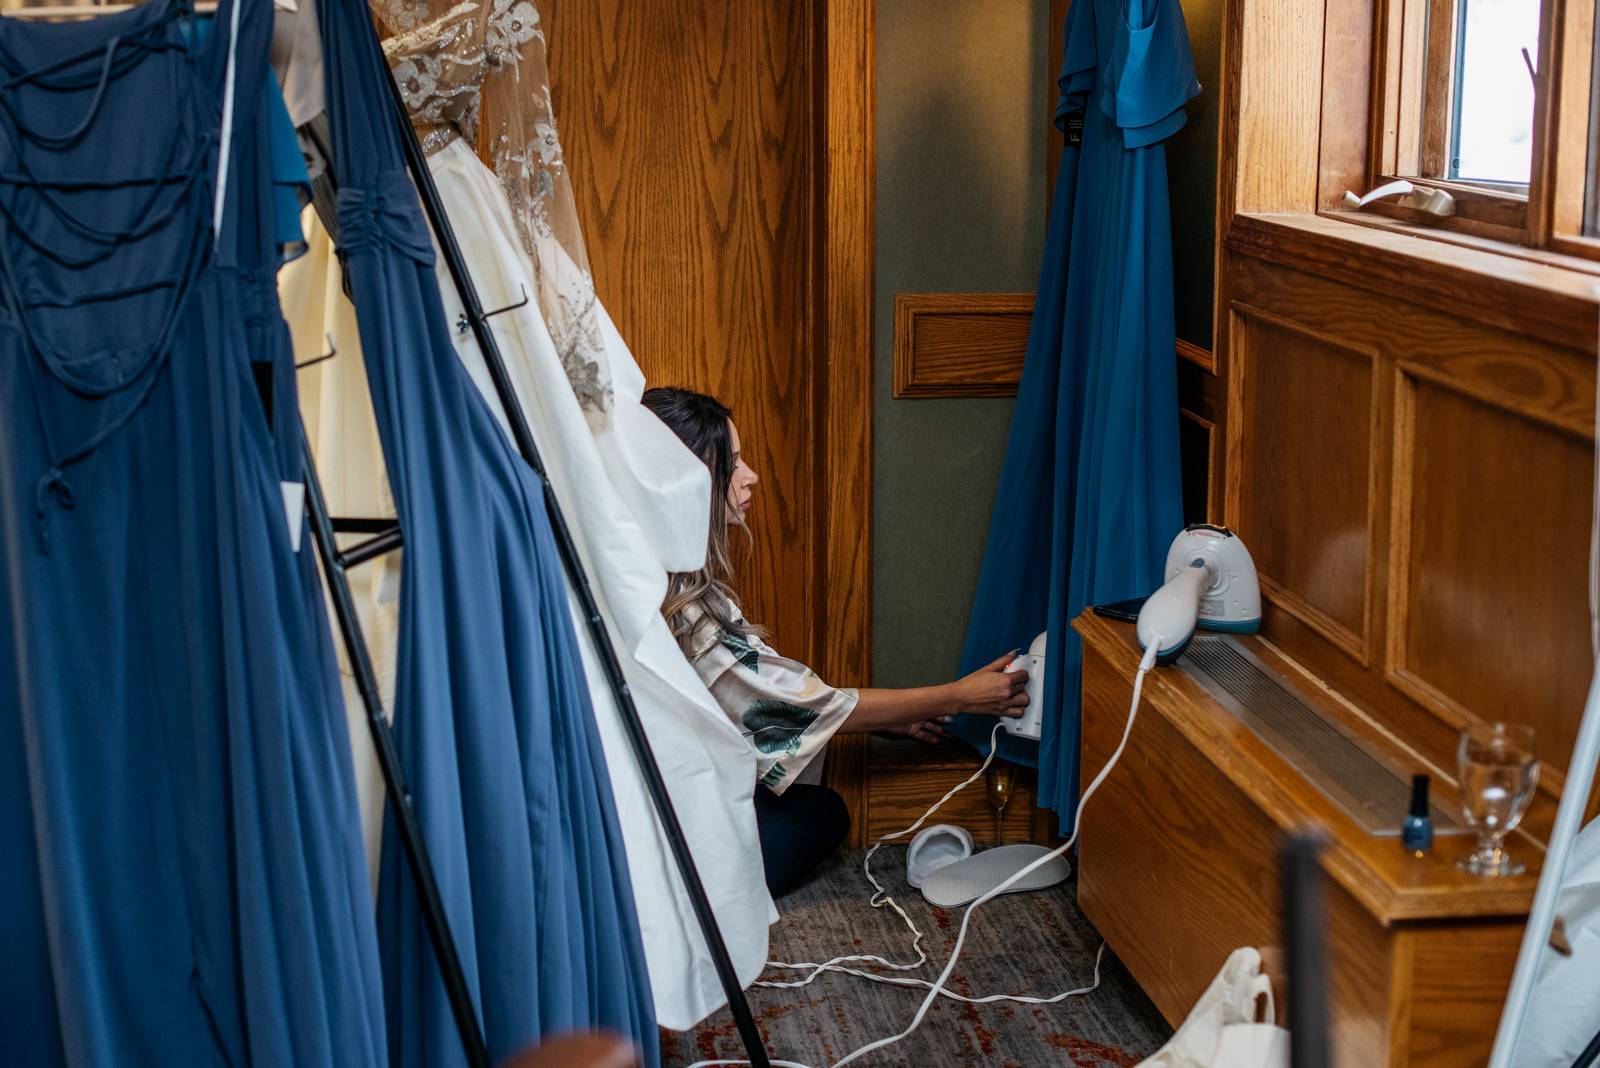 bridesmaid ironing her dress